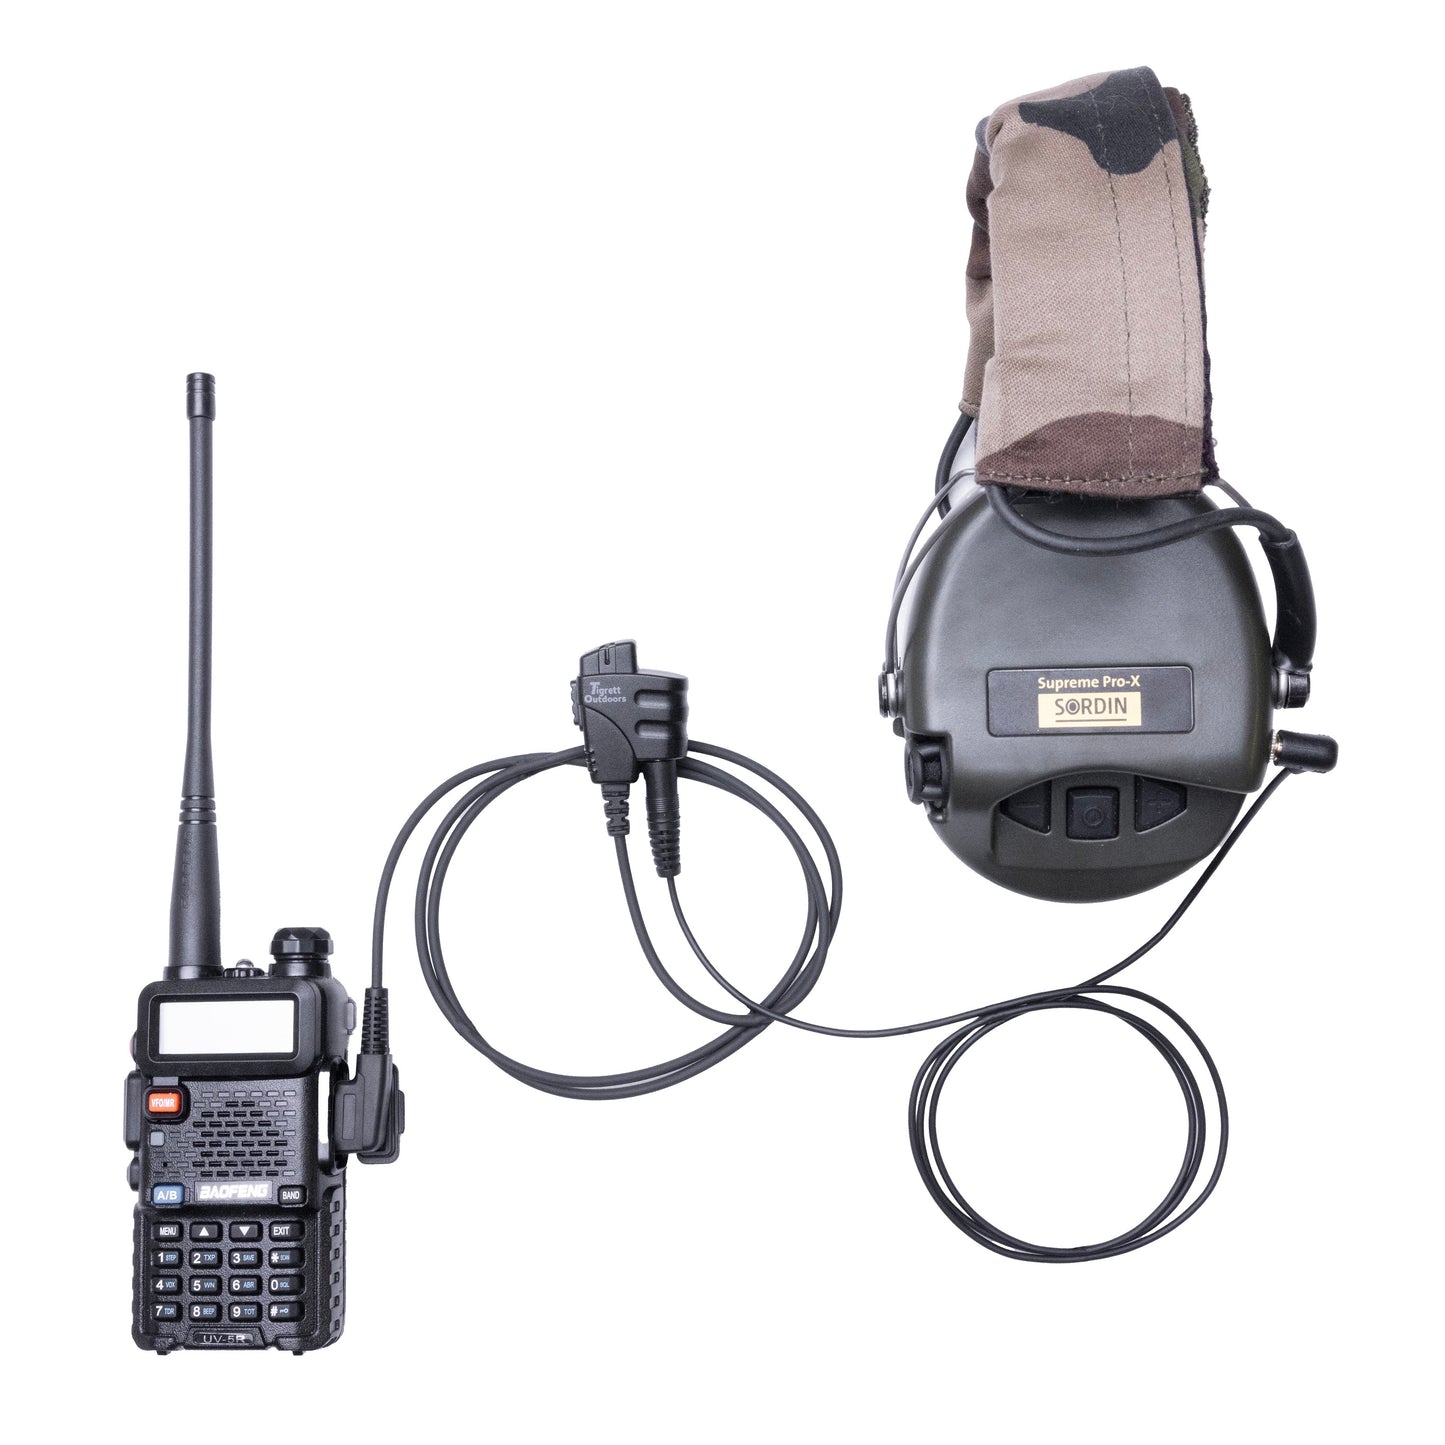 SMC (Shoot, Move, Communicate) Baofeng, Yaesu radios to Auxiliary Port for Electronic Earmuffs